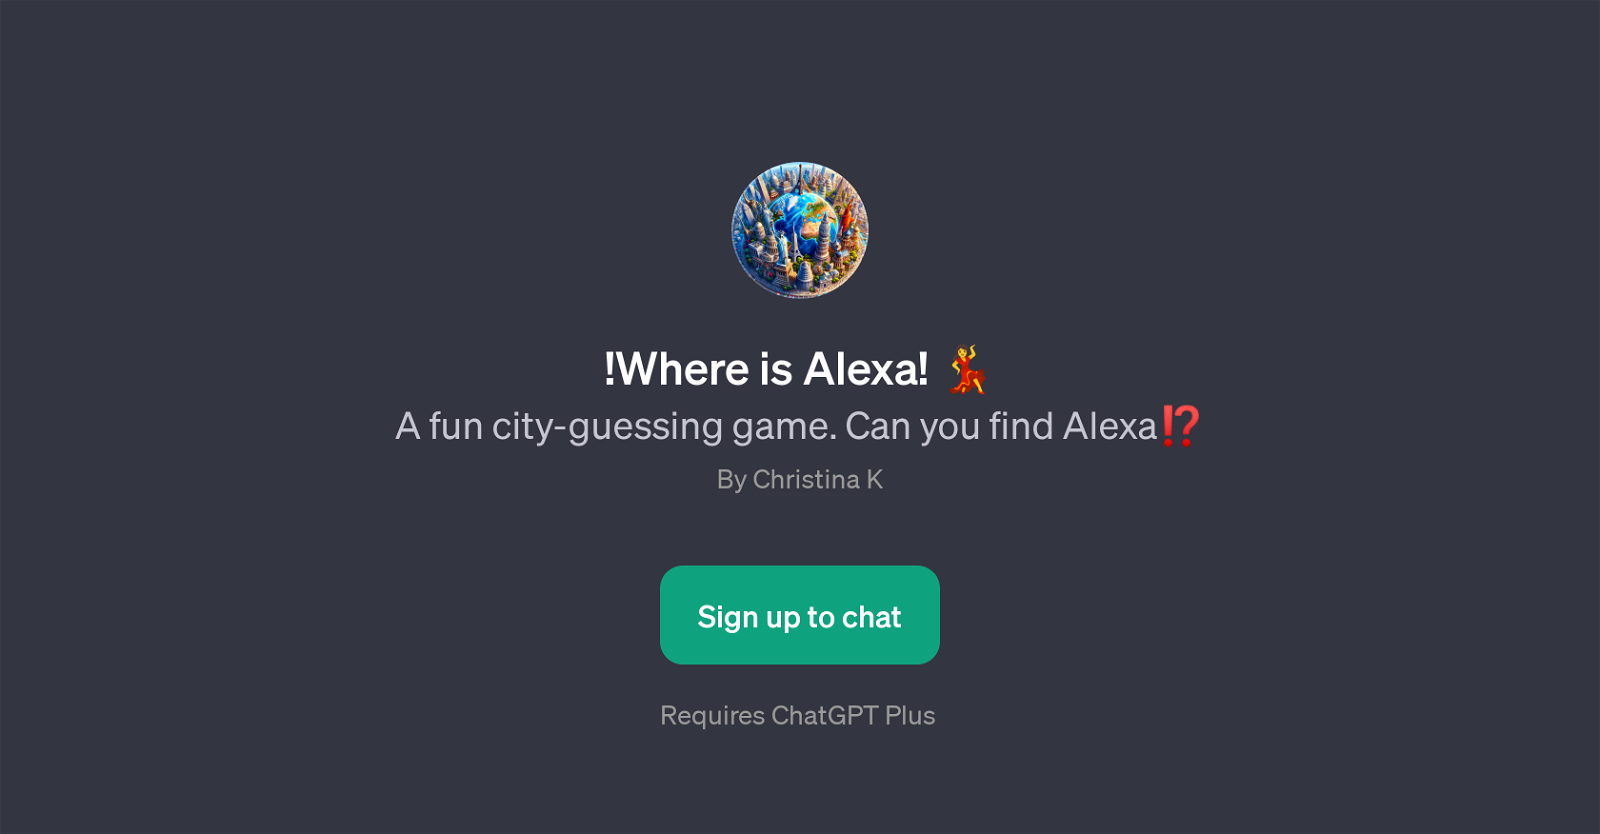 !Where is Alexa! website